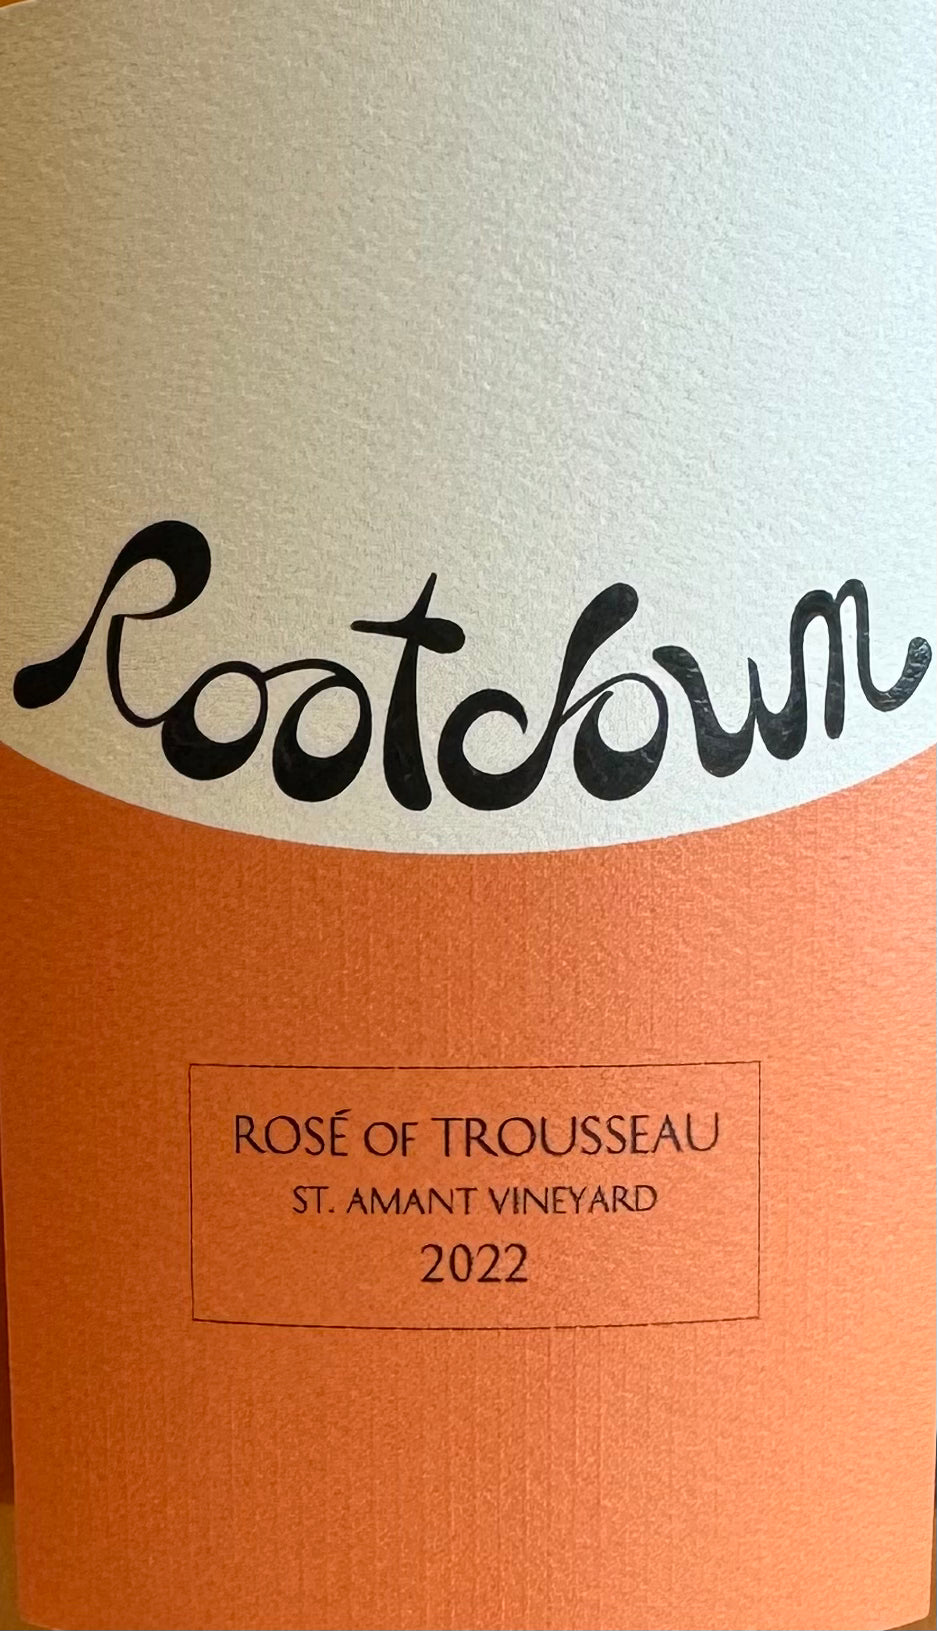 Rootdown - Rose of Trousseau